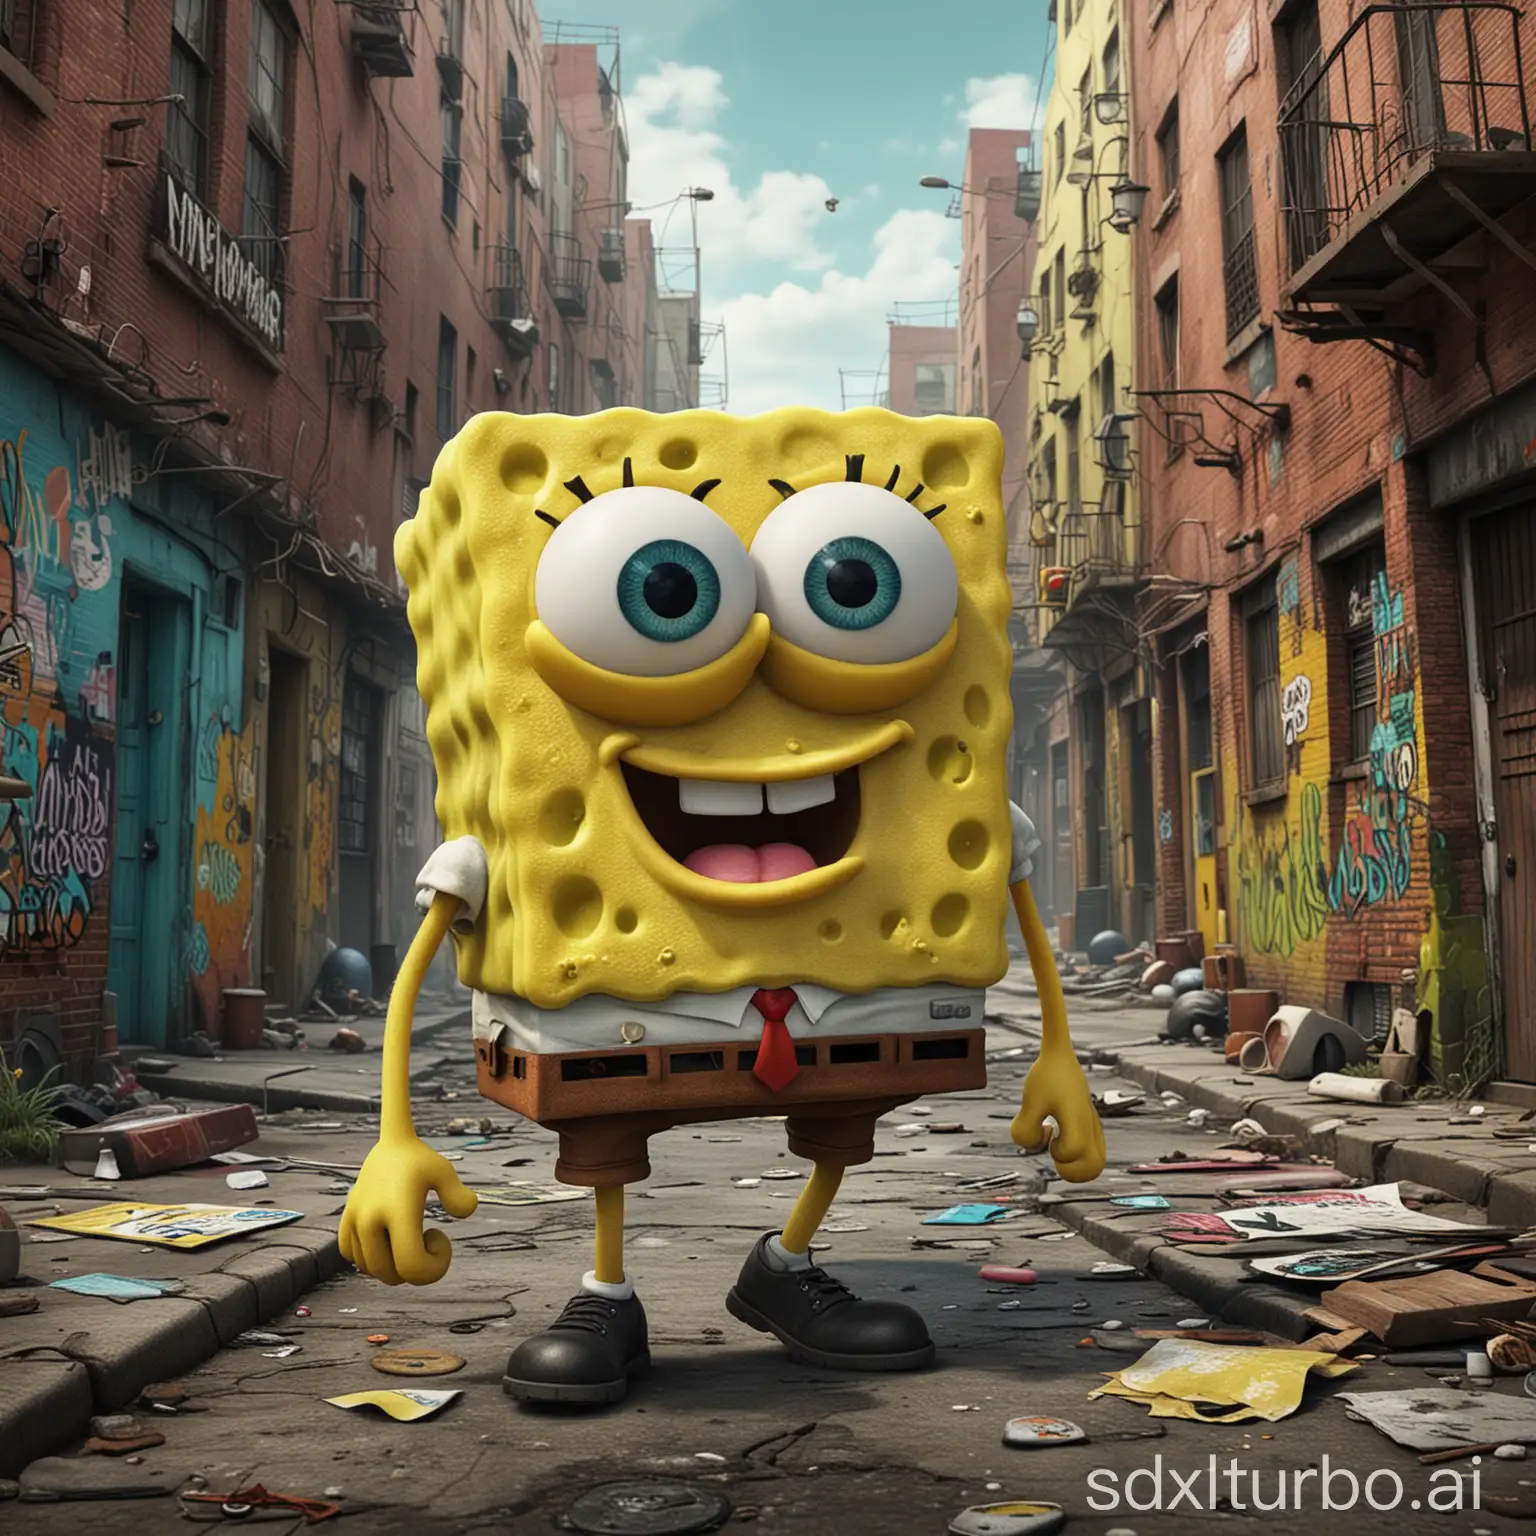 Spongebob-Squarepants-as-a-Rockstar-on-a-GhettoFabulous-Album-Cover